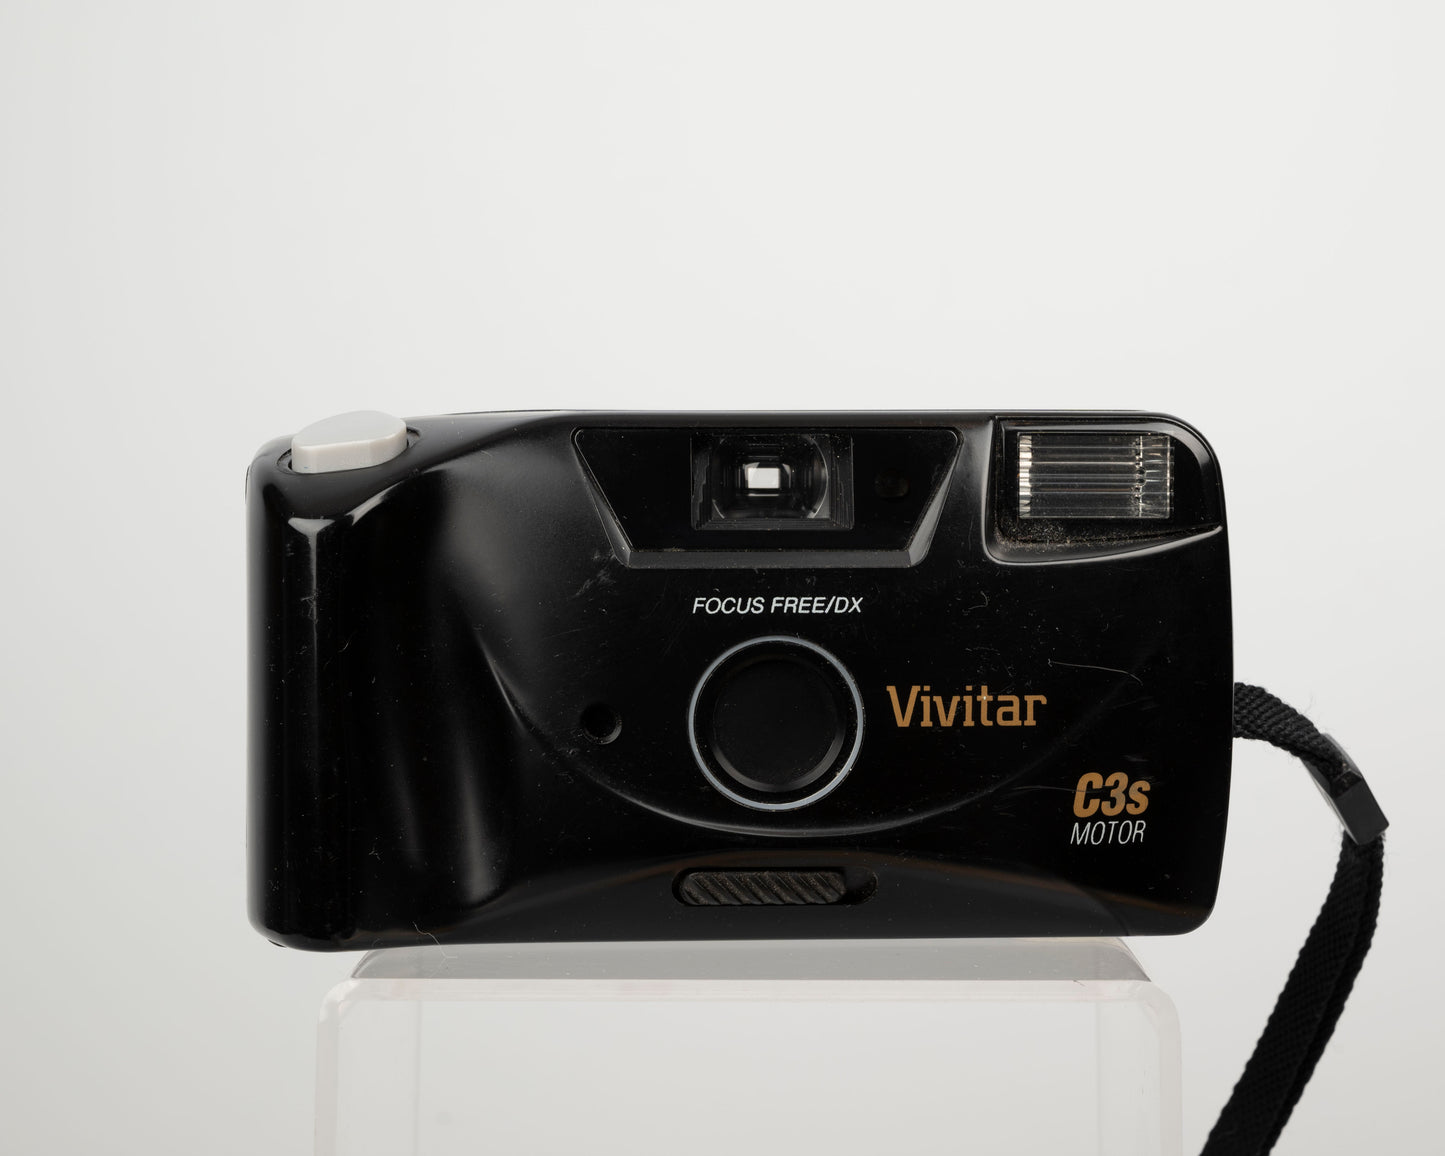 Vivitar C3S Motor compact focus free 35mm film camera